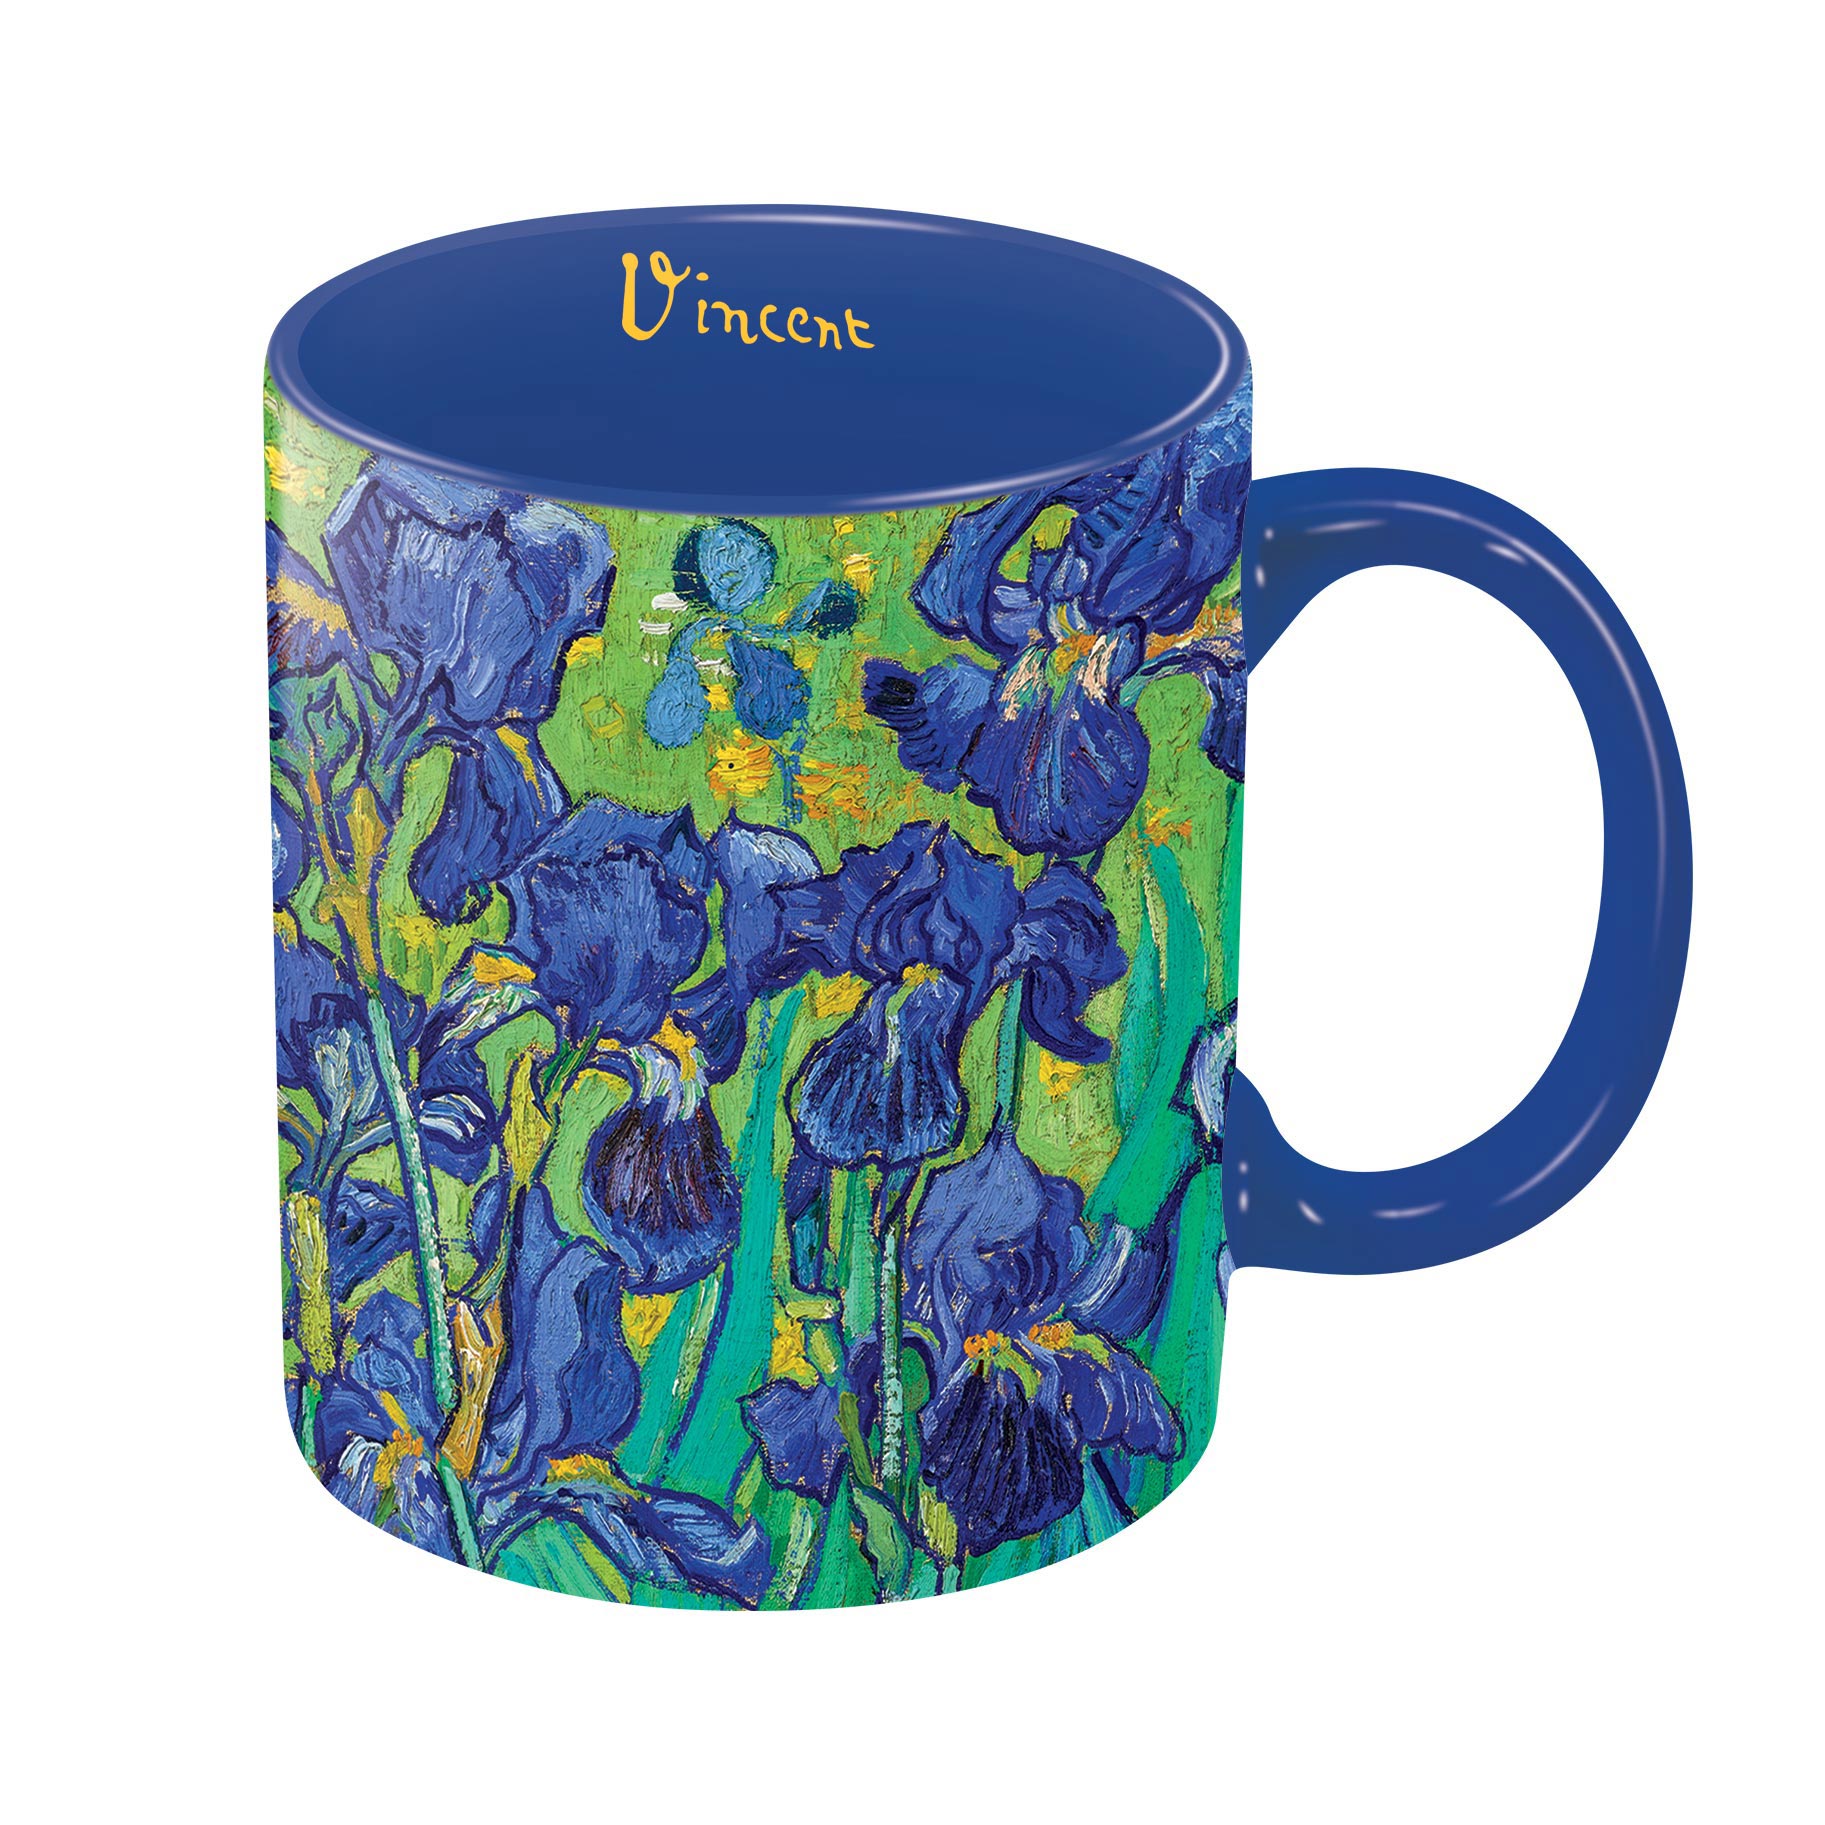 Latte Art Inspired by Van Gogh's “Irises”